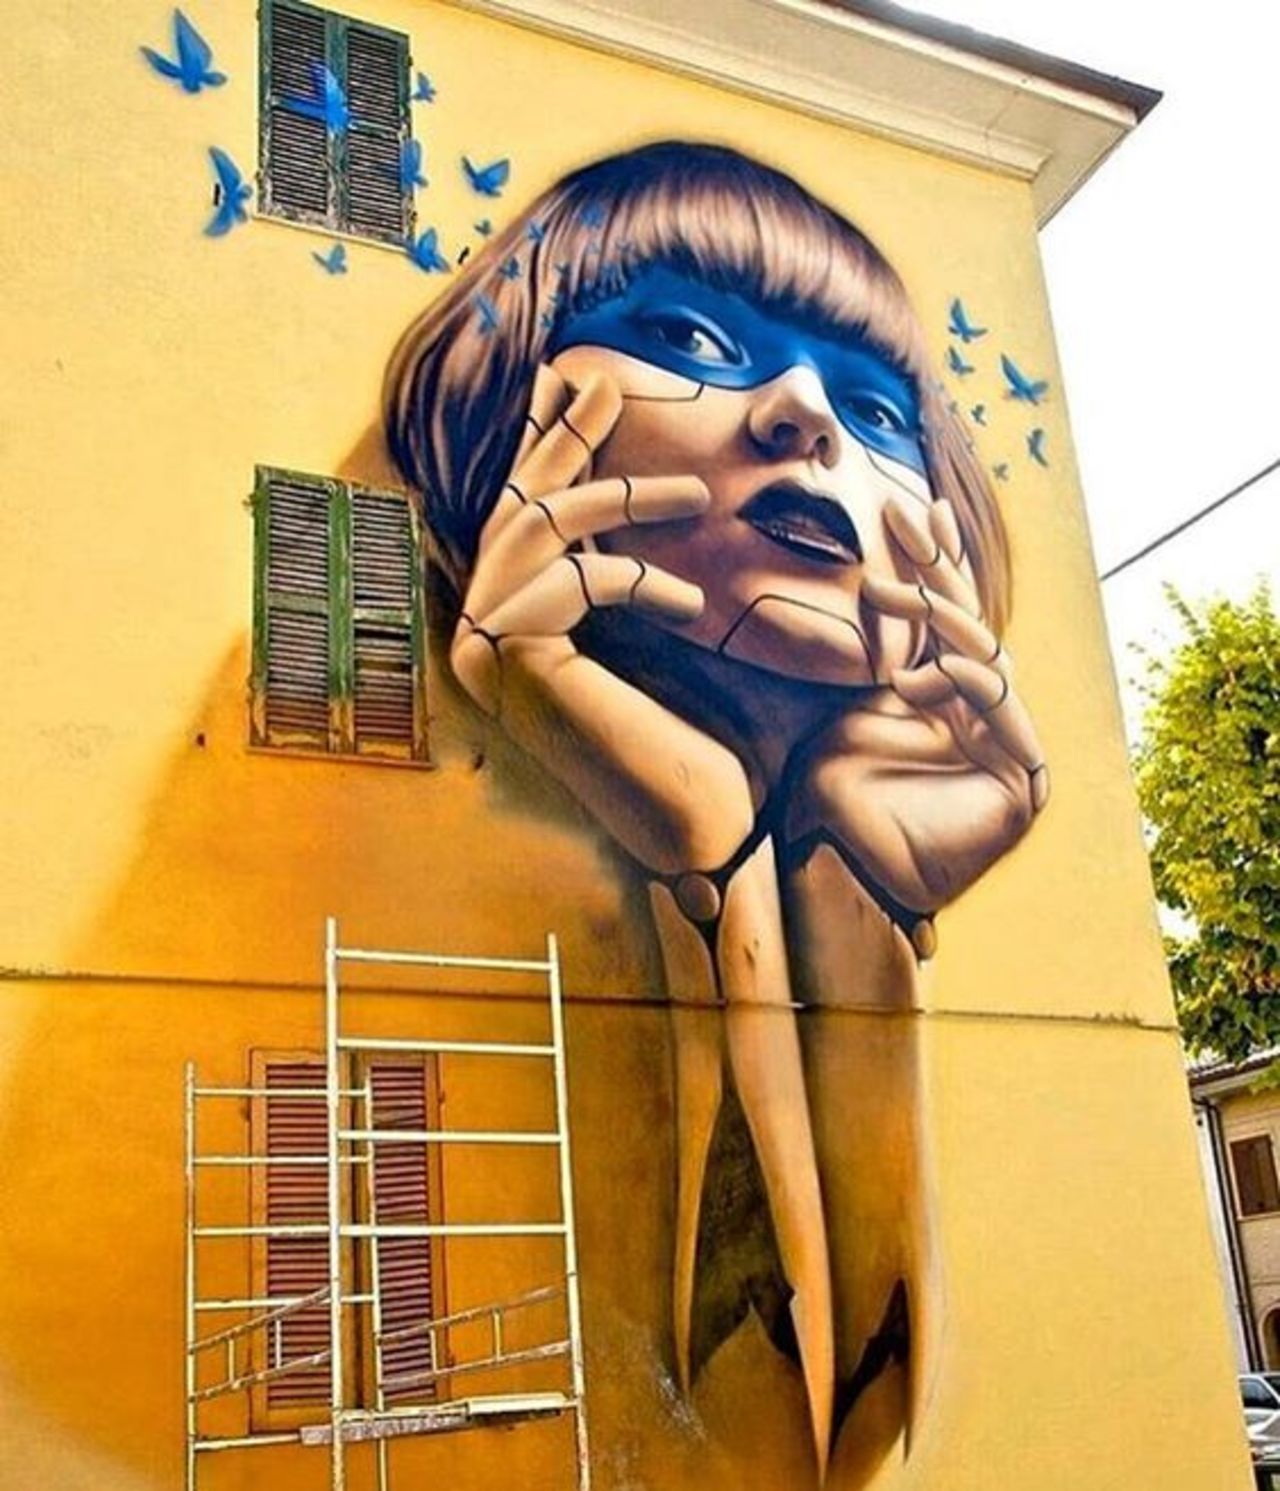 Puppet Life in Italy         •          #streetart #graffiti #Italy #art  . : https://t.co/R1ni3nxbdL